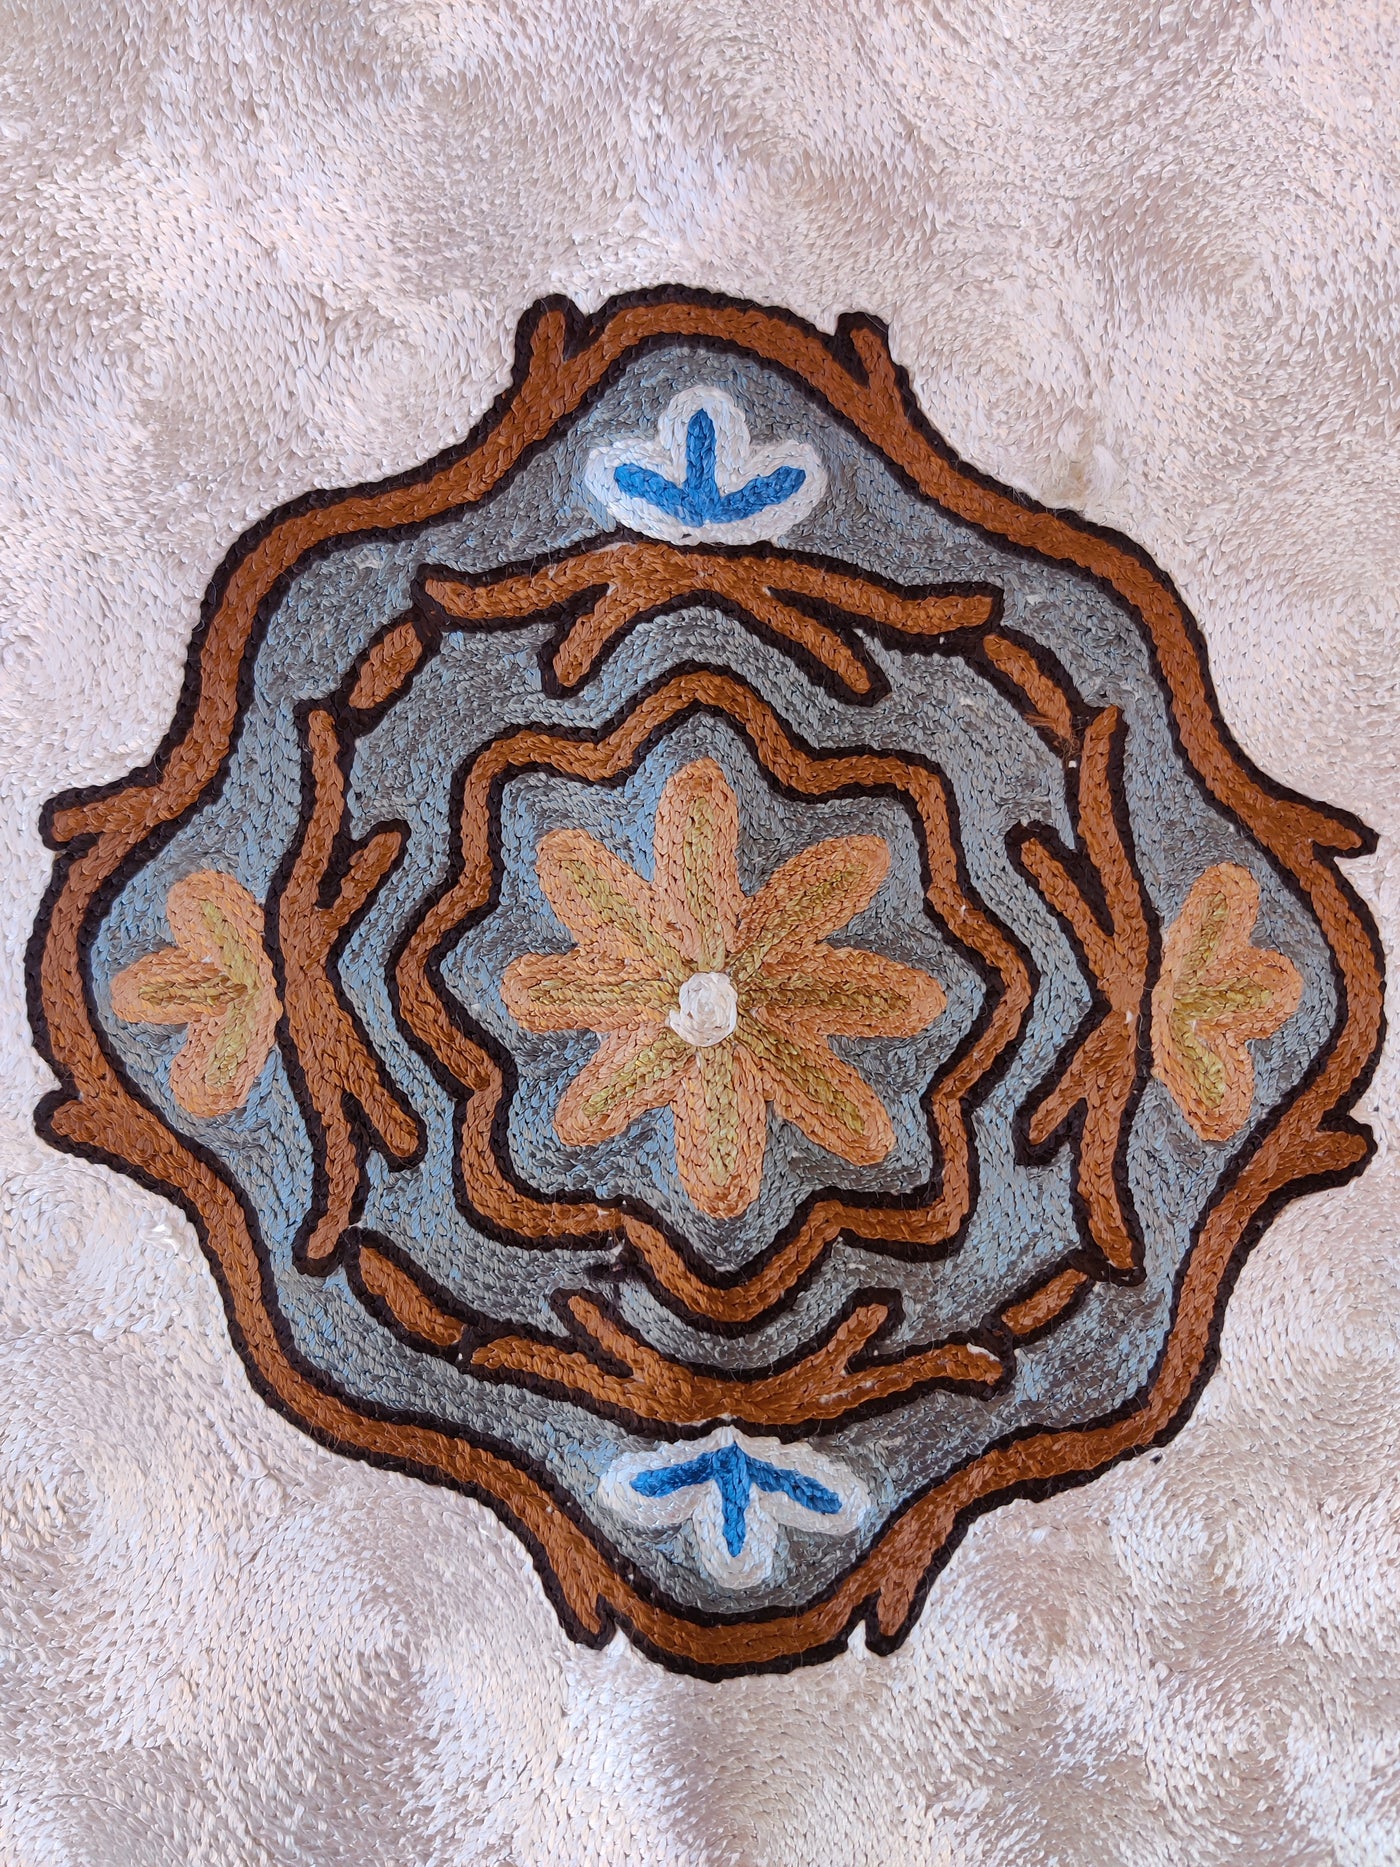 Kashmiri Hand-Embroidered Chain Stitch jainimaz (Prayer Mat) - KashmKari